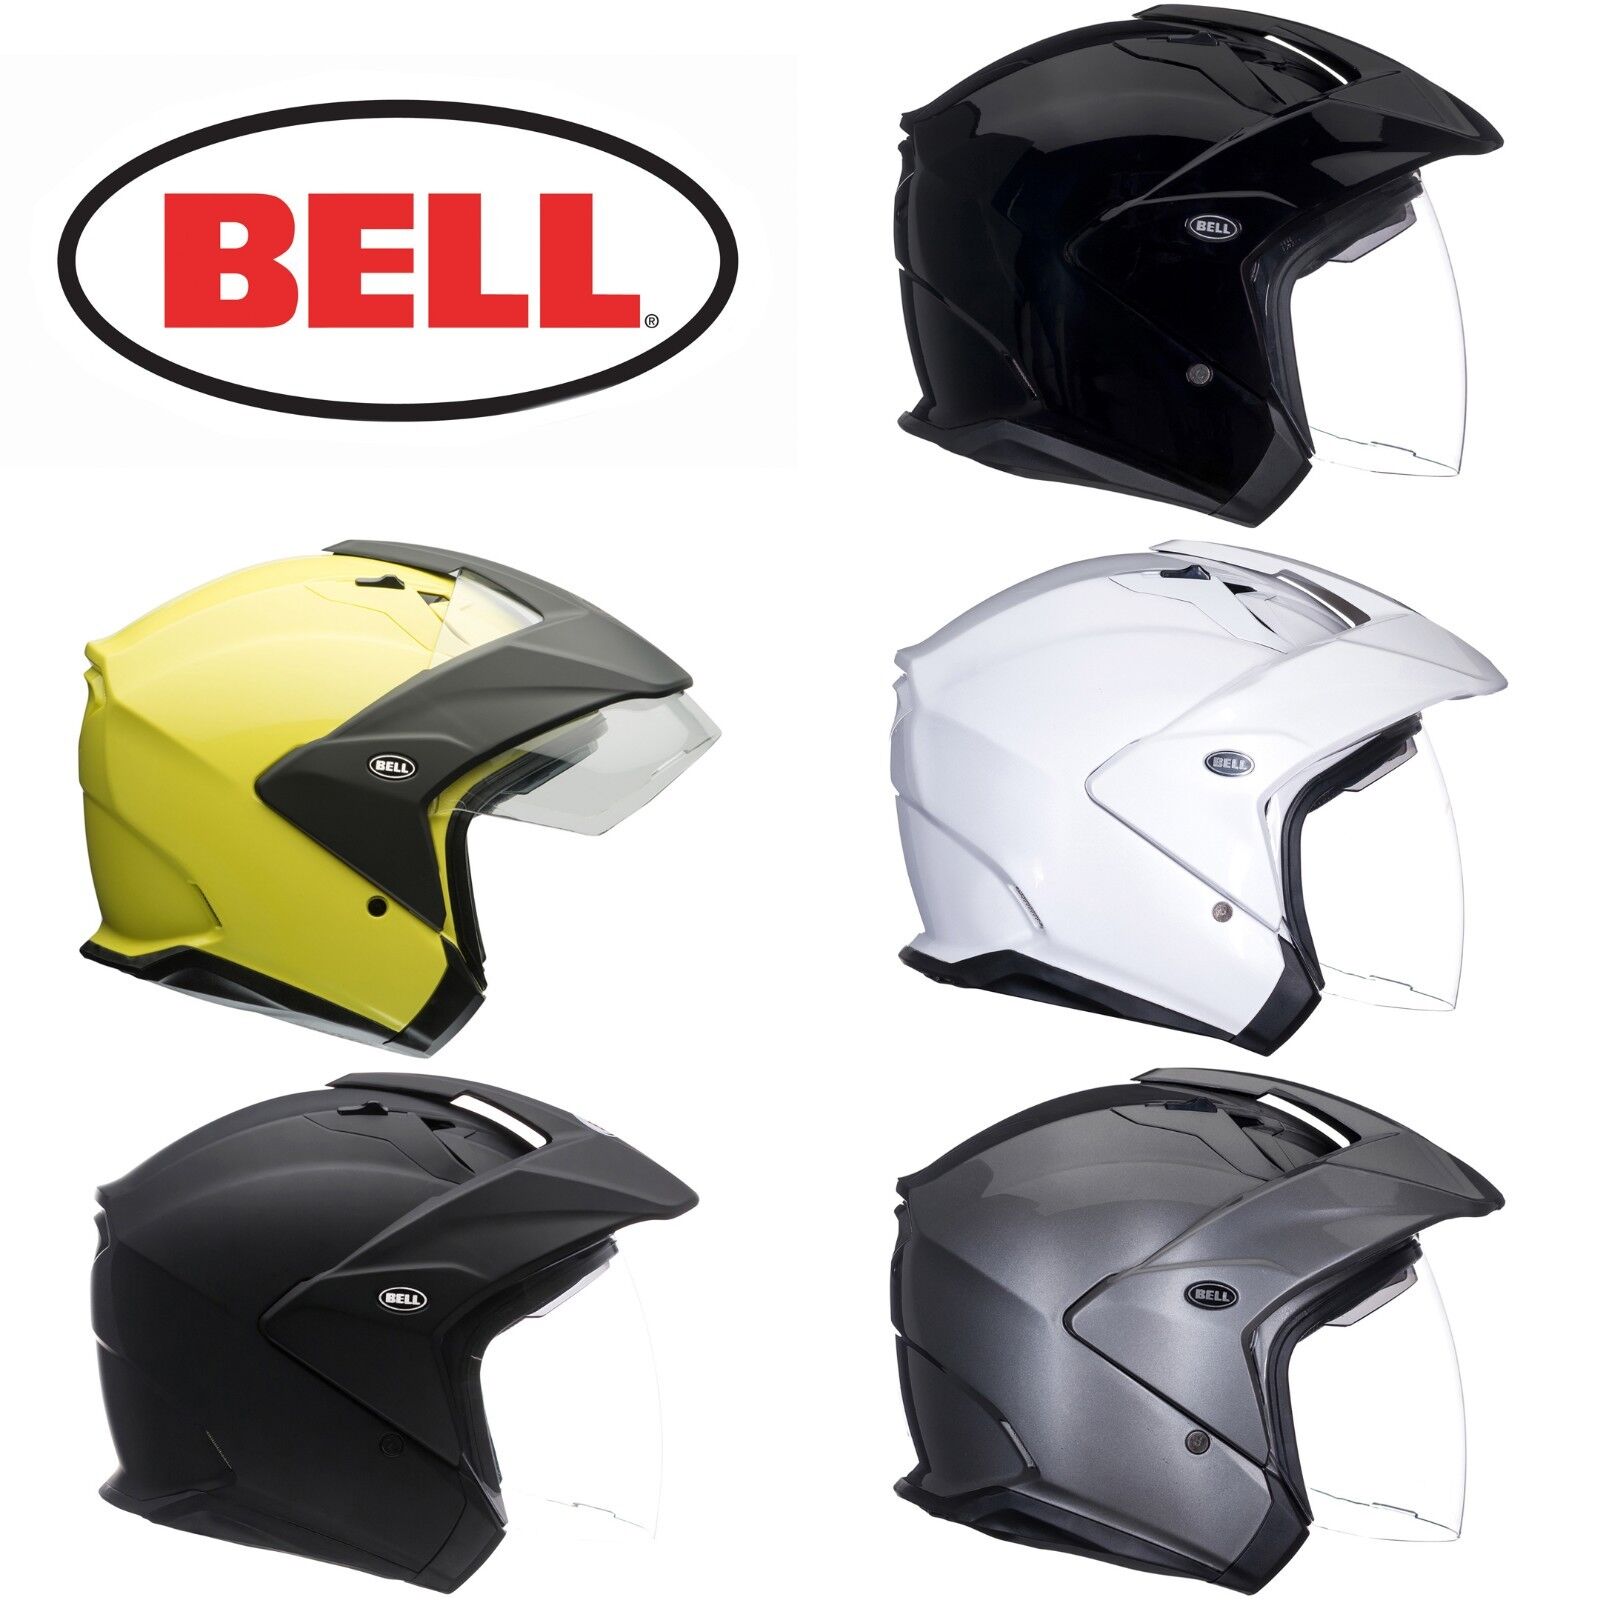 Bell Mag-9 Cruiser Street Motorcycle Helmet - CHOOSE COLOR & SIZE